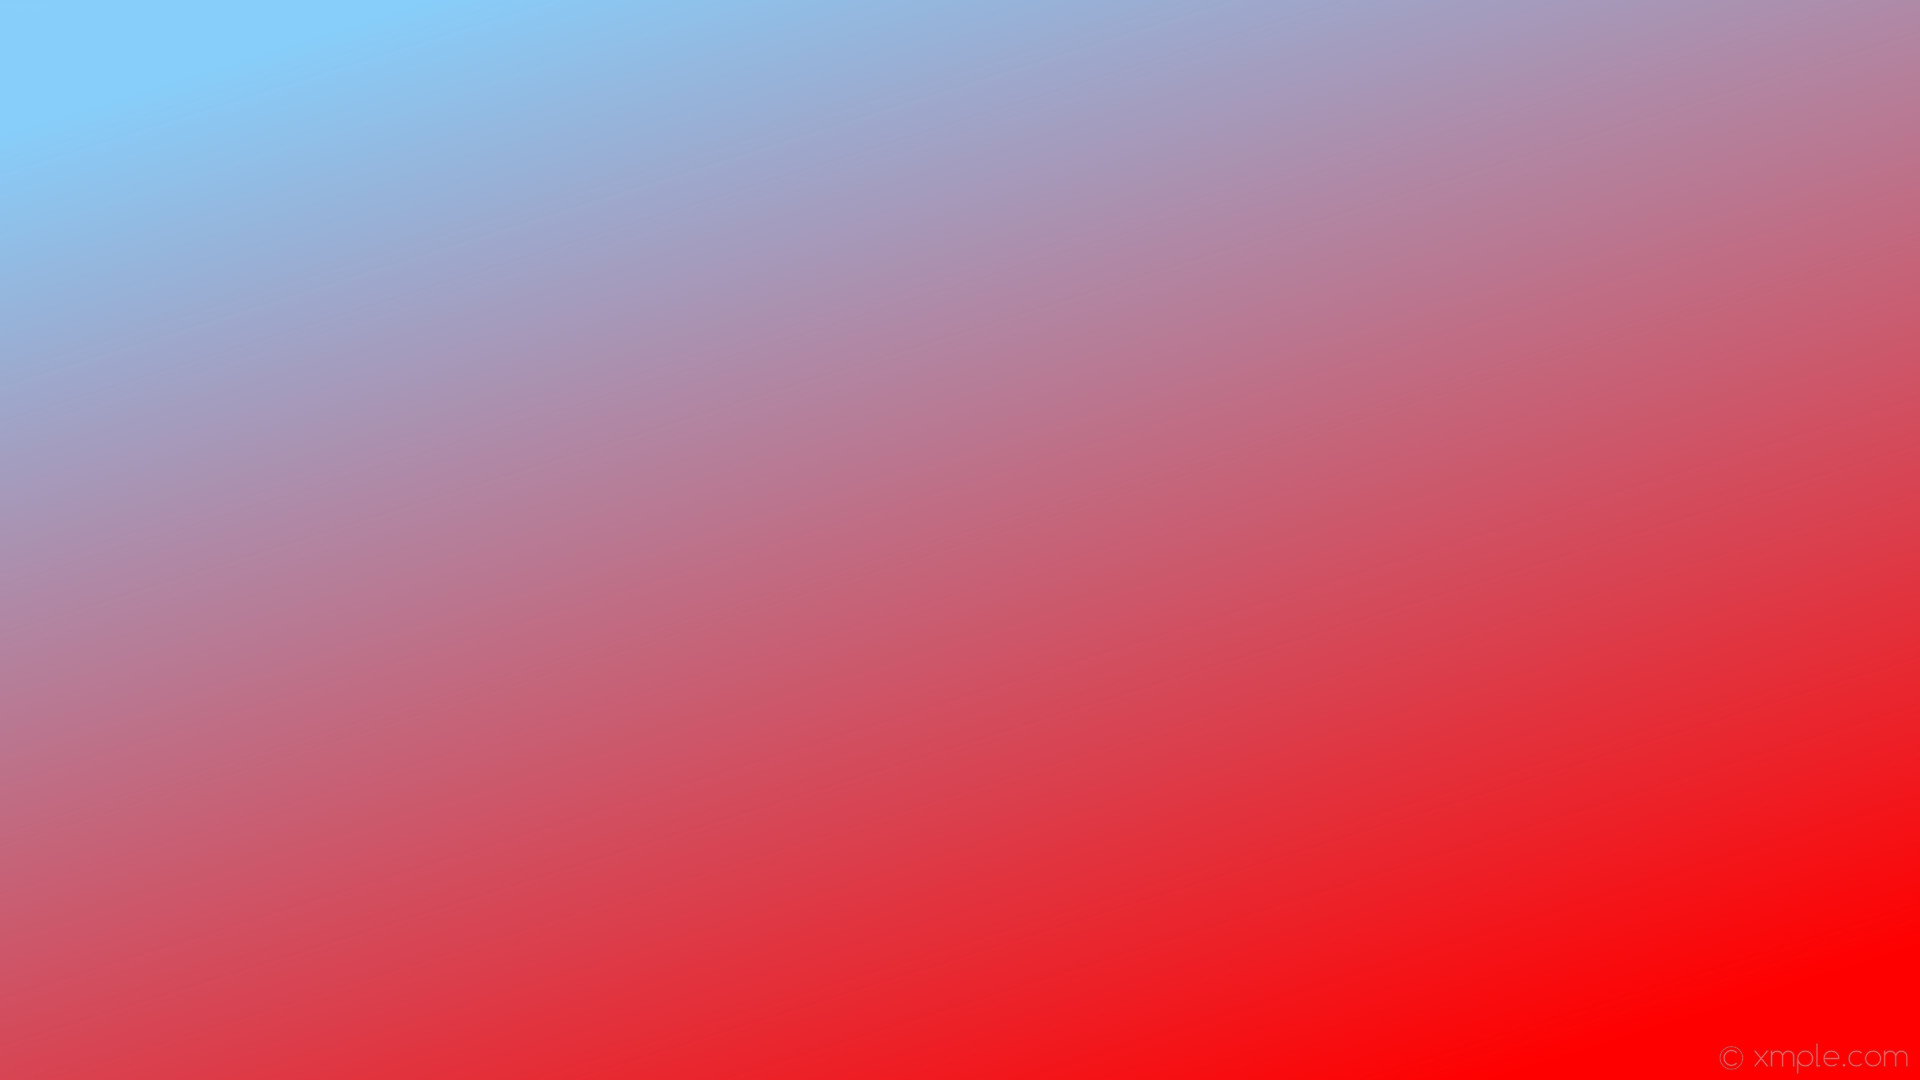 1920x1080 wallpaper gradient linear red blue light sky blue #ff0000 #87cefa 315Â°